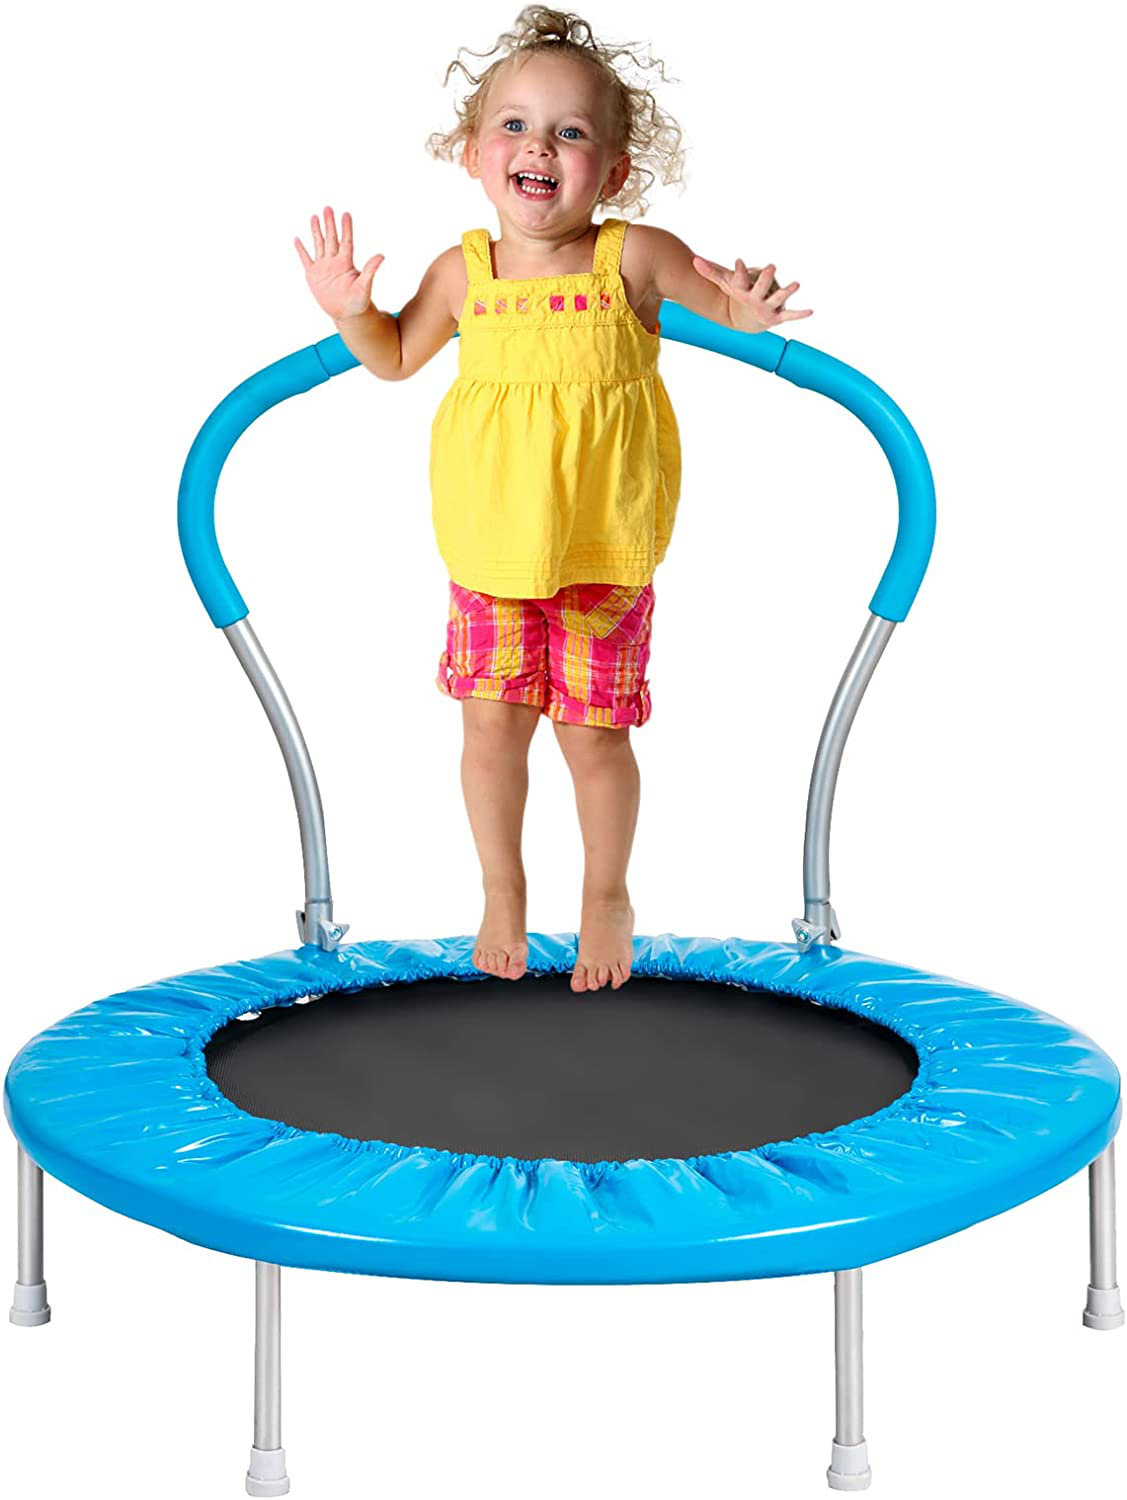 Sapphome 36' Round Indoor Kid/Toddler Trampoline with Handlebar